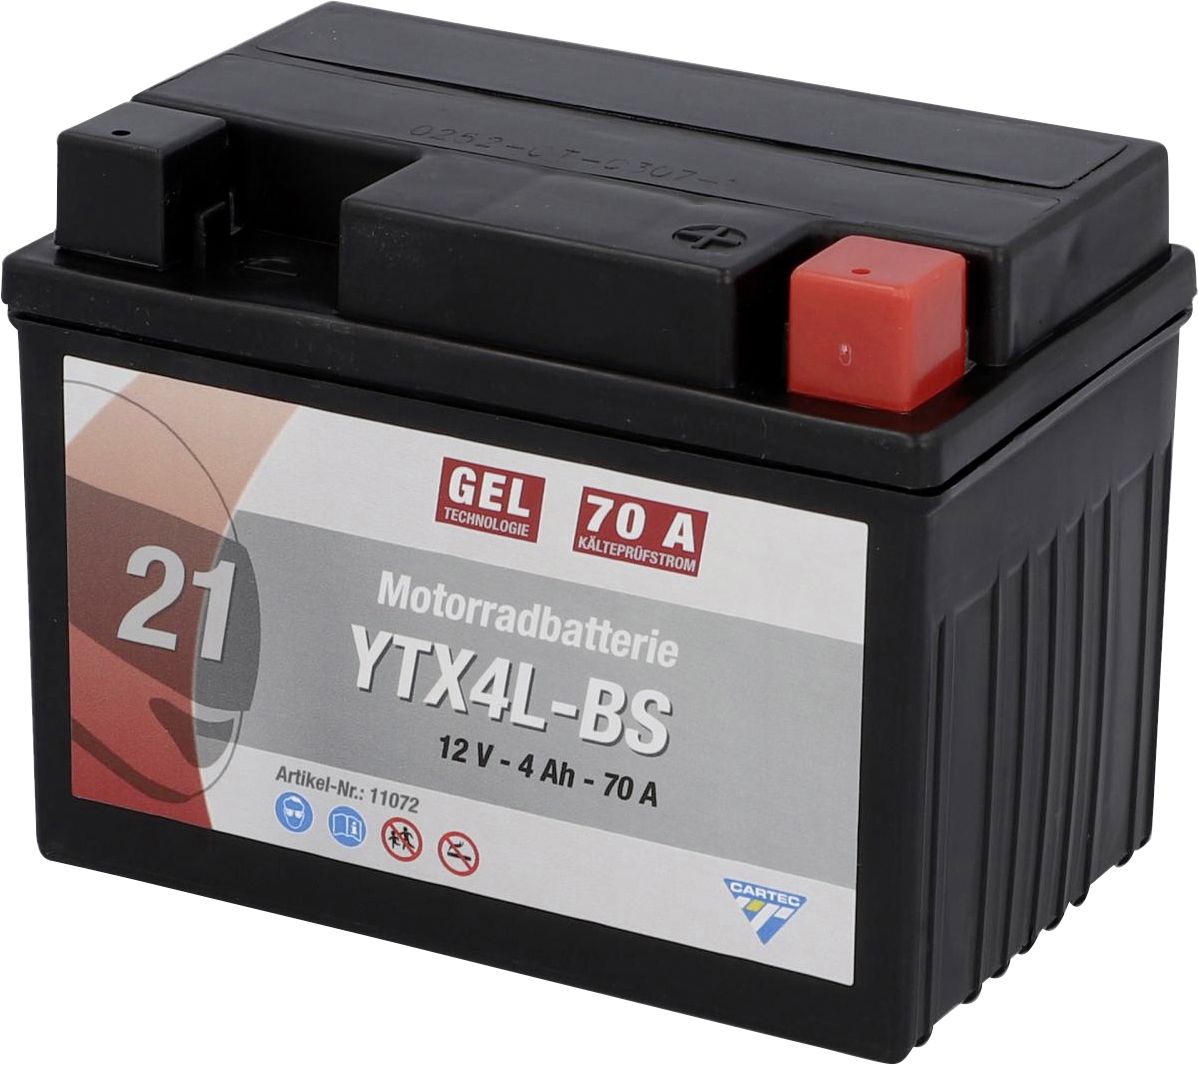 Cartec Gel Motorradbatterie YTX4L-BS 4Ah 70A GLO680456080